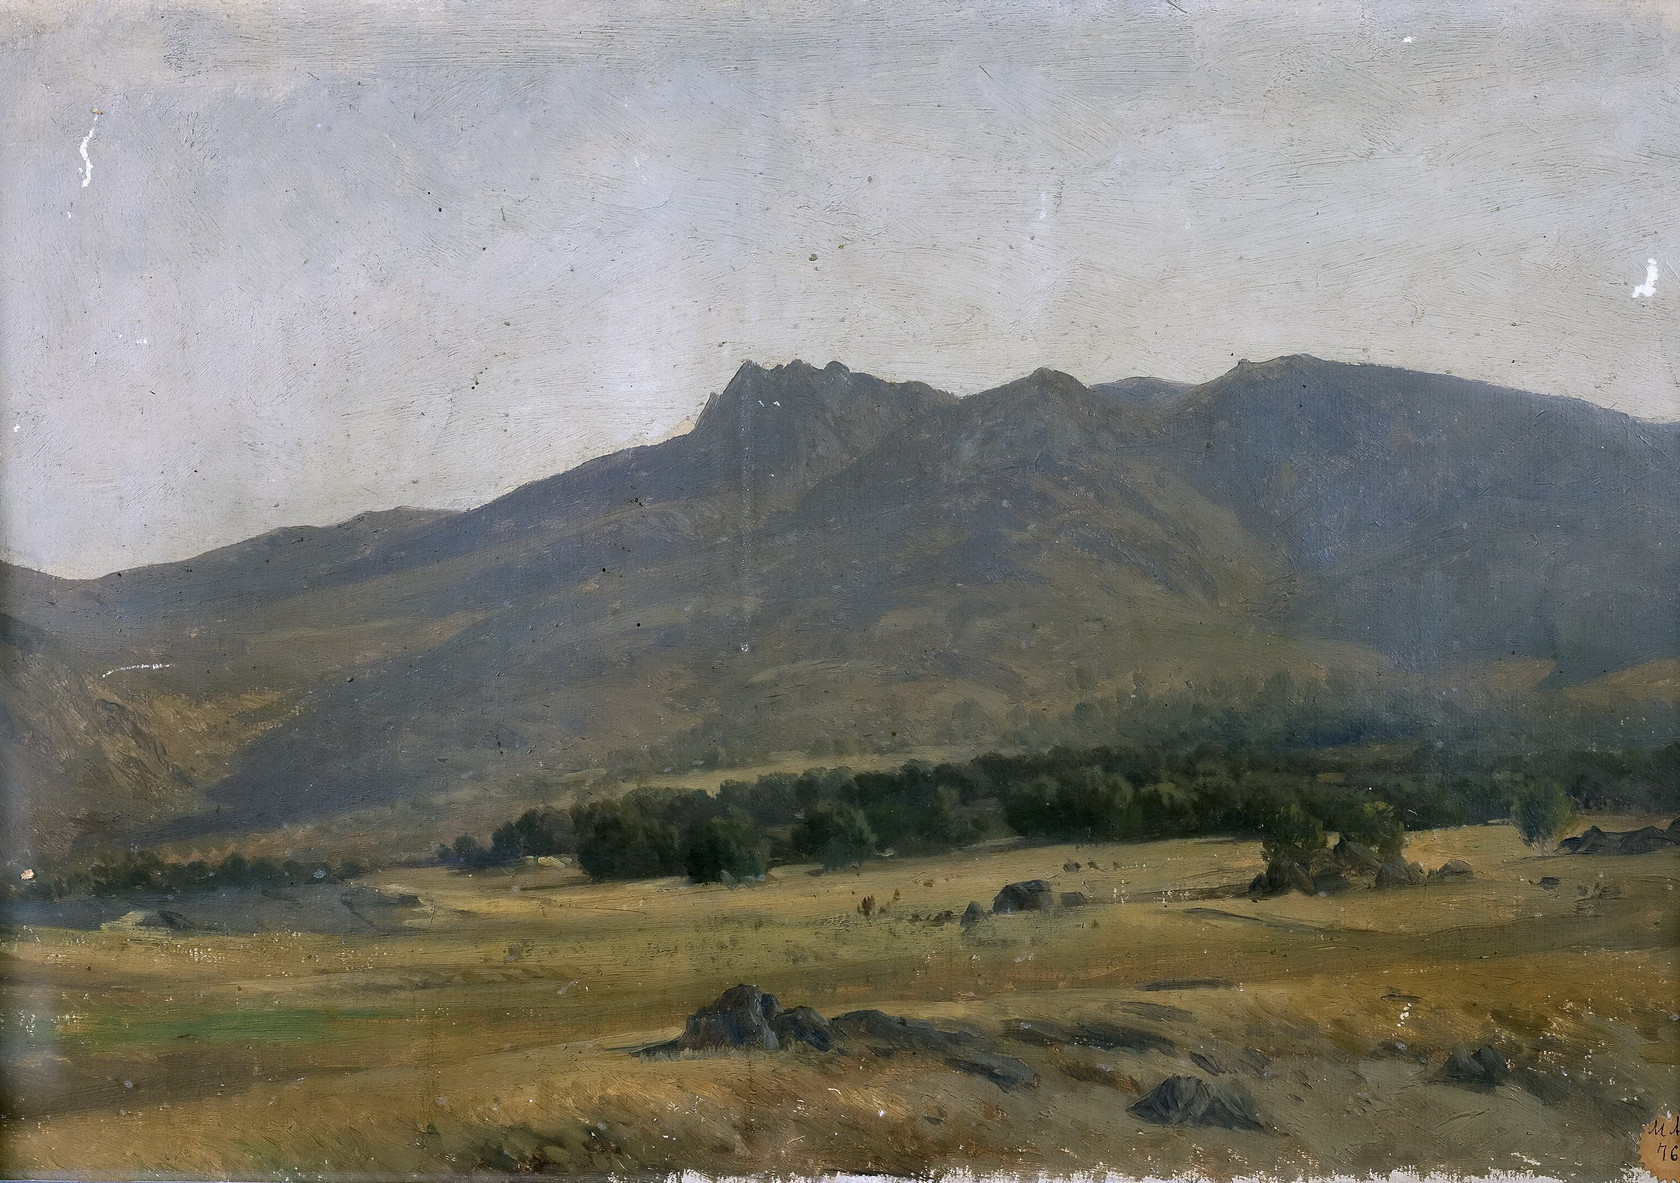 Картина - Долина в горах Сьерра-де-Гуадаррама, 1870